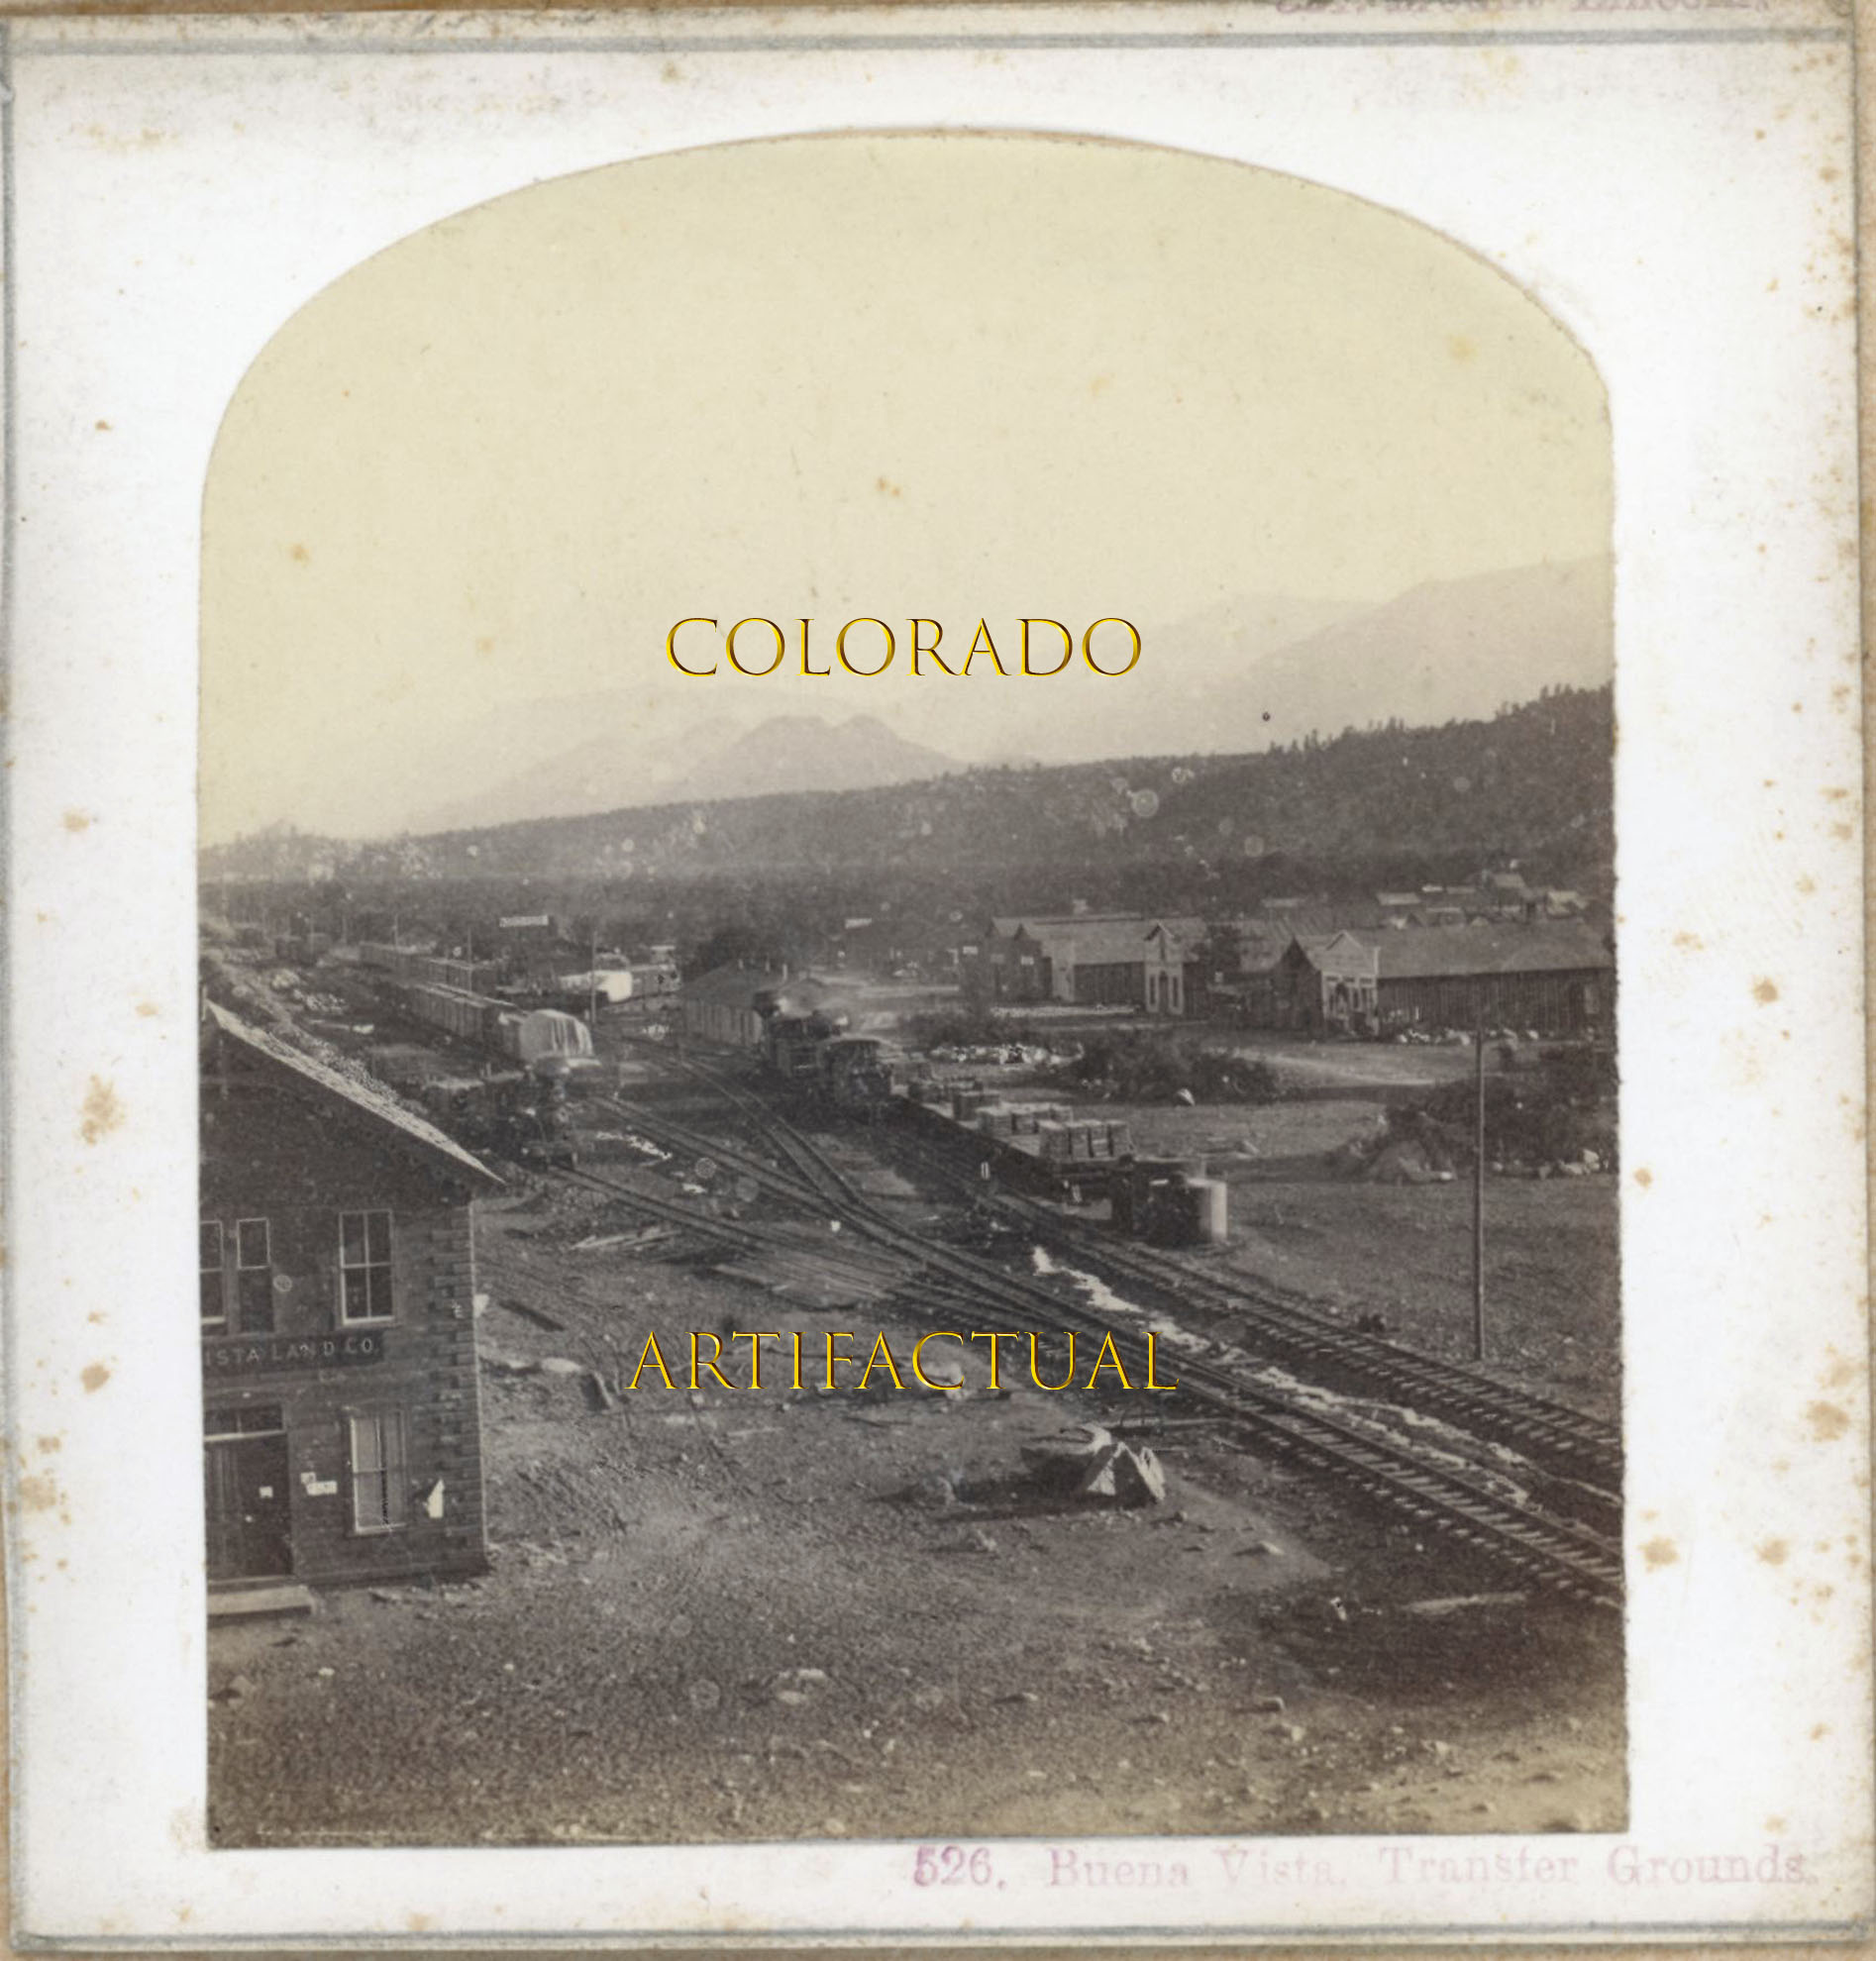 DENVER SOUTH PARK & PACIFIC RAILWAY Buena Vista Colorado transfer yards WH Jackson photograph 1879